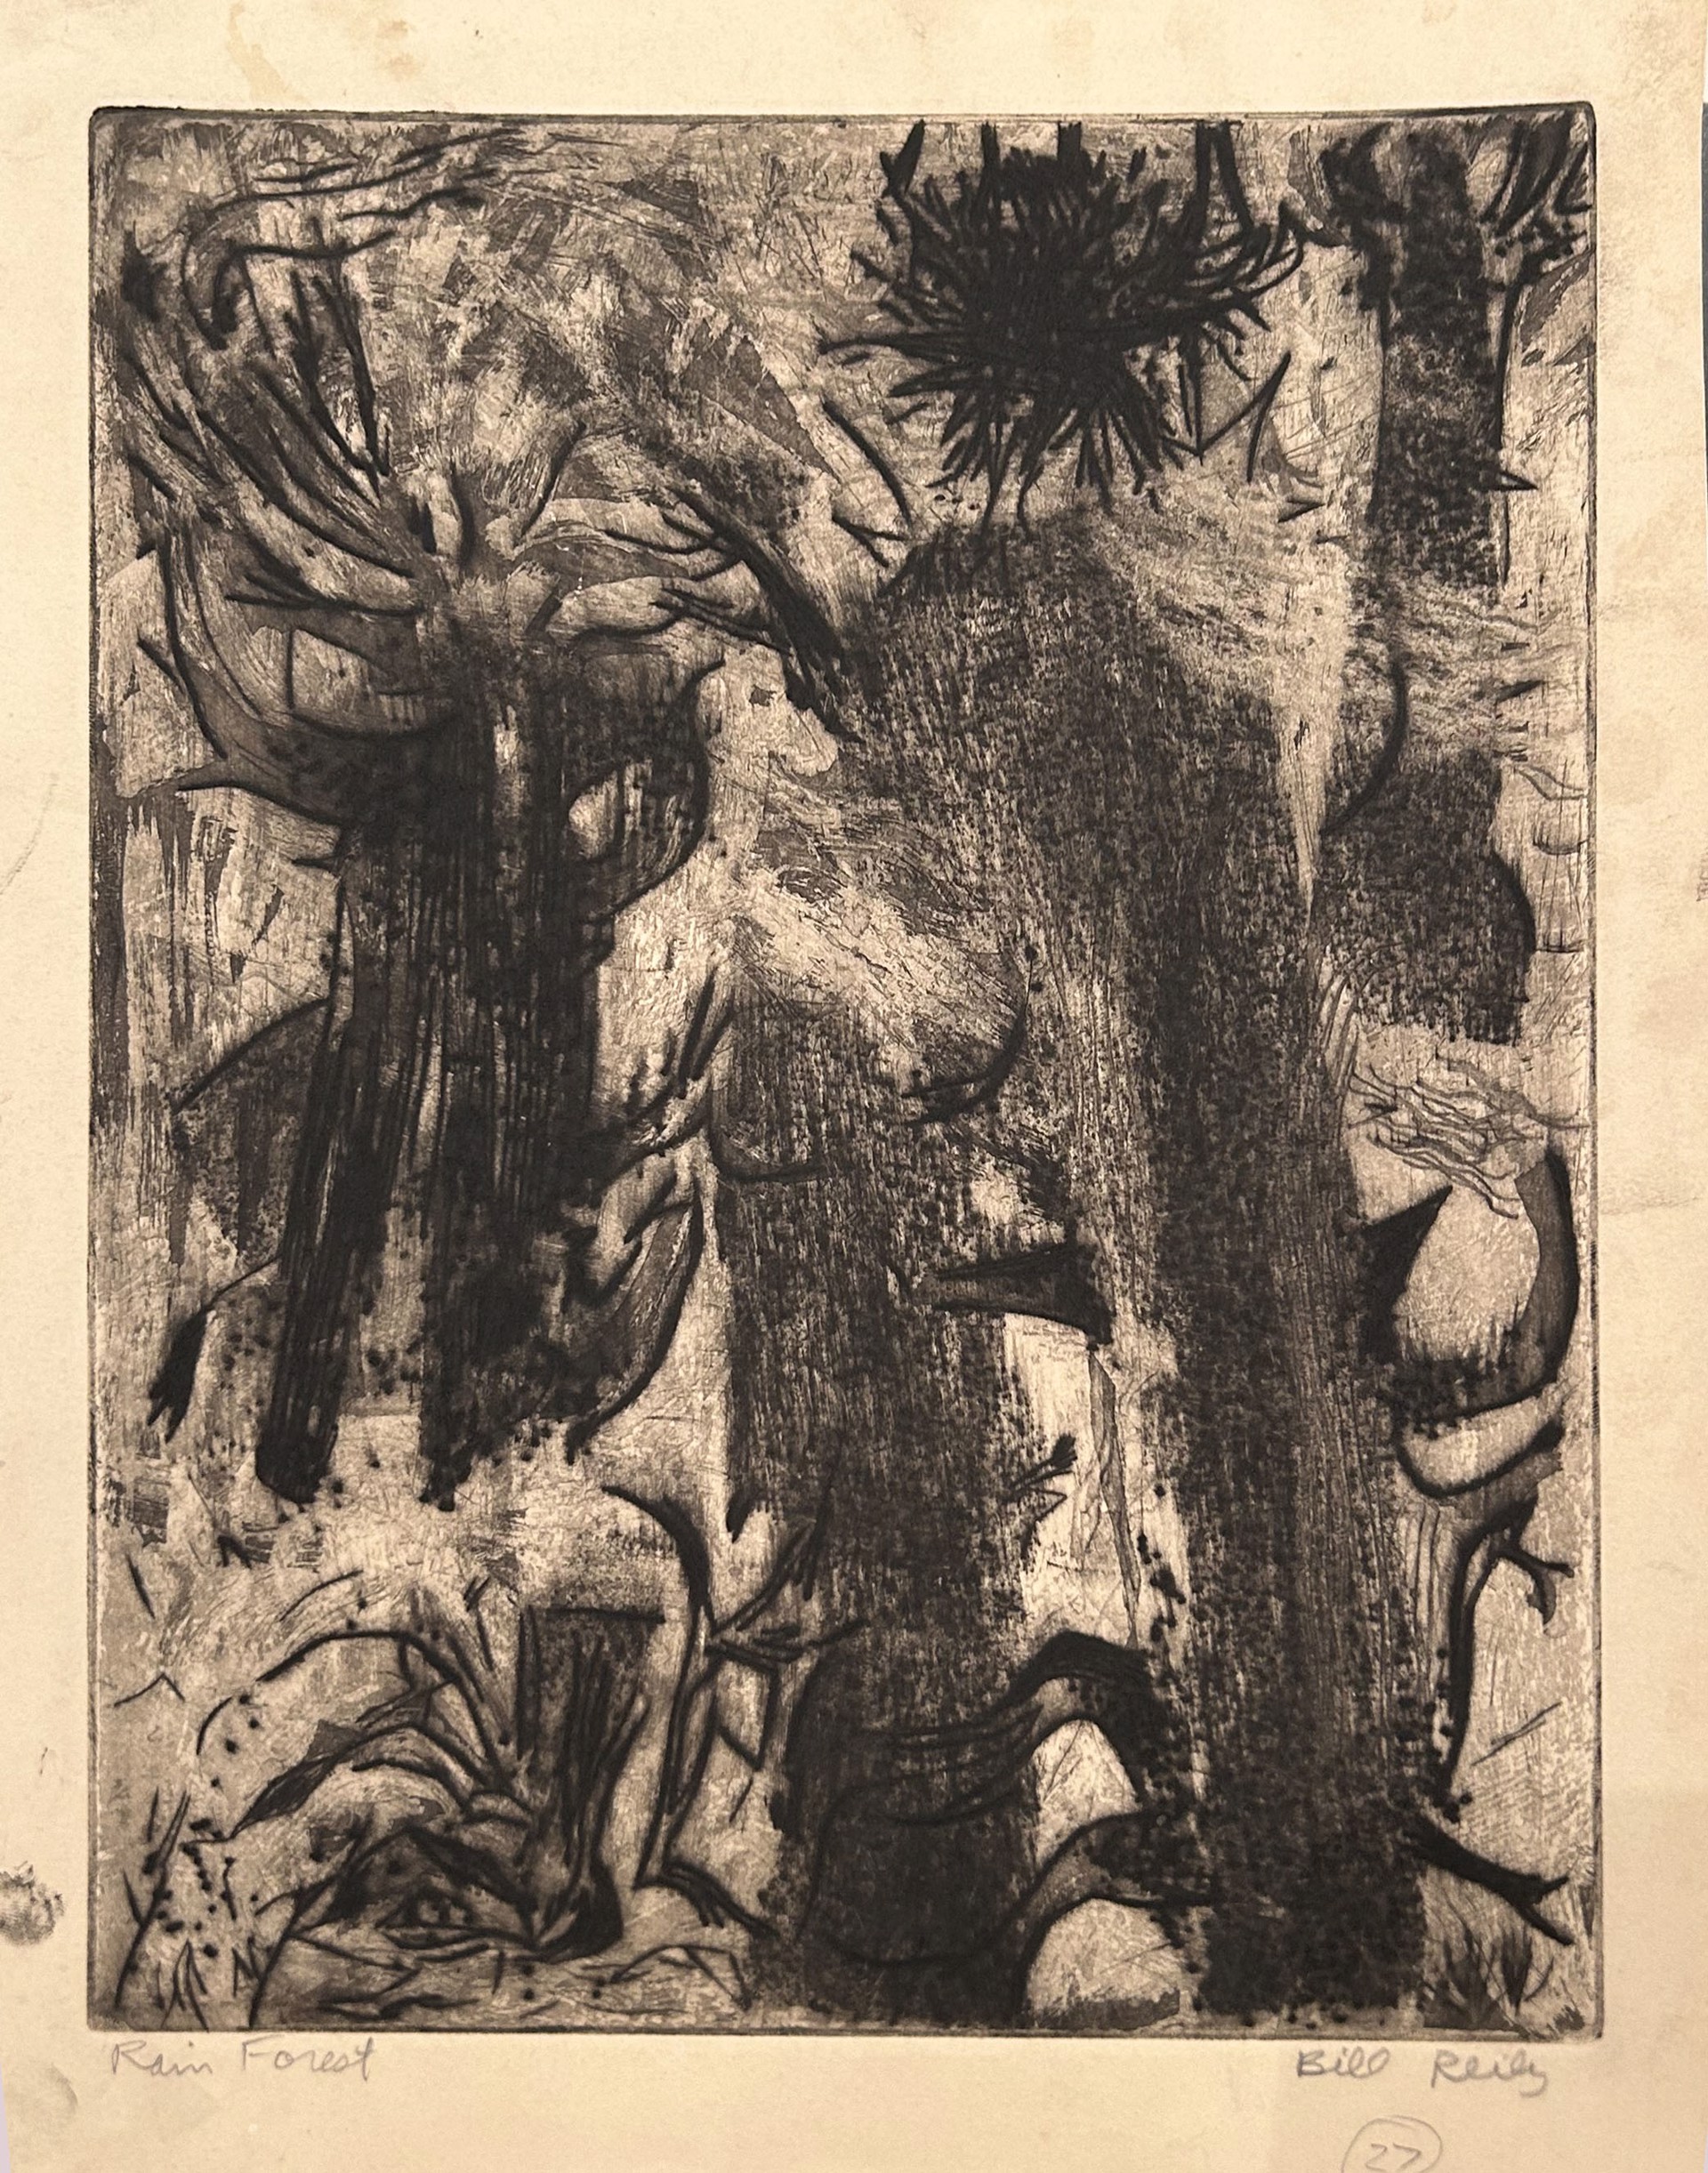 27d. Rain Forest by Bill Reily Prints